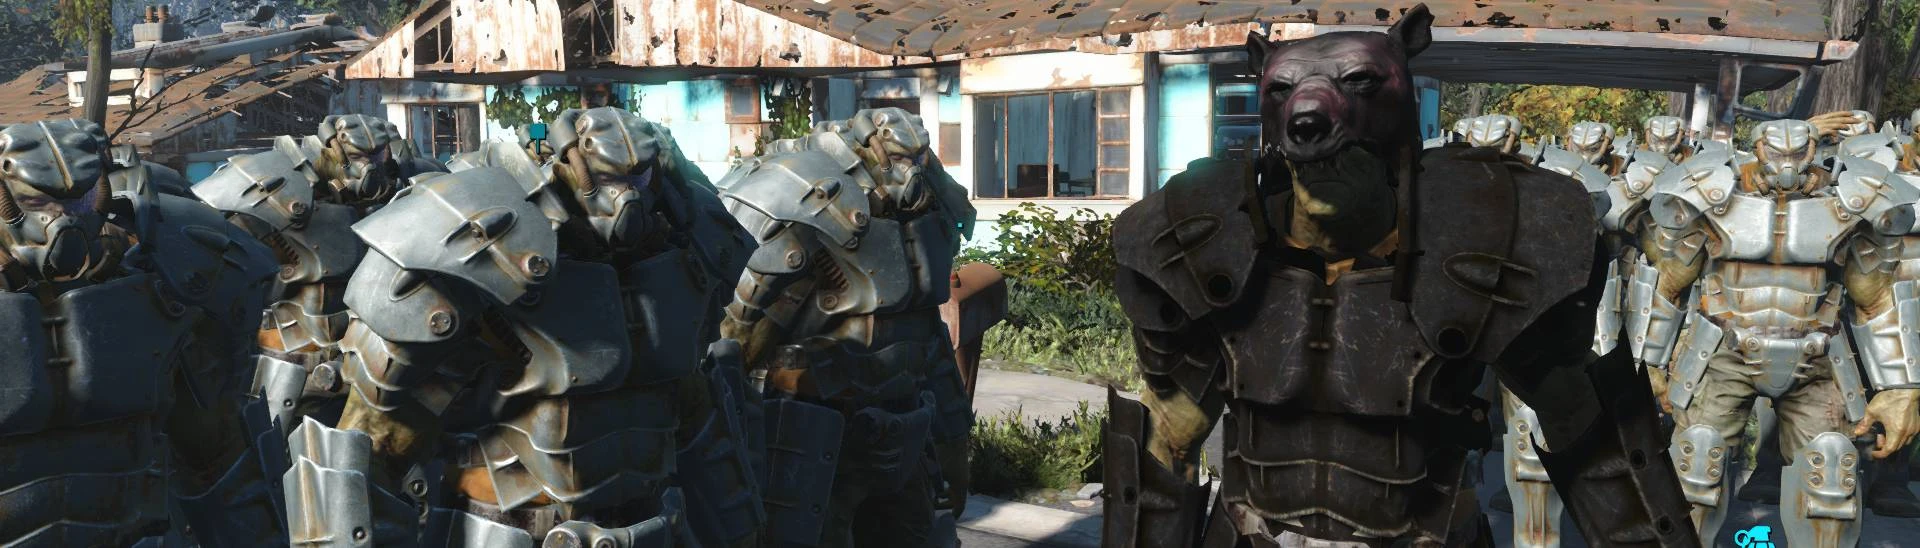 Tumbajambas Supermutant Armor Implementation At Fallout 4 Nexus Mods And Community 1447